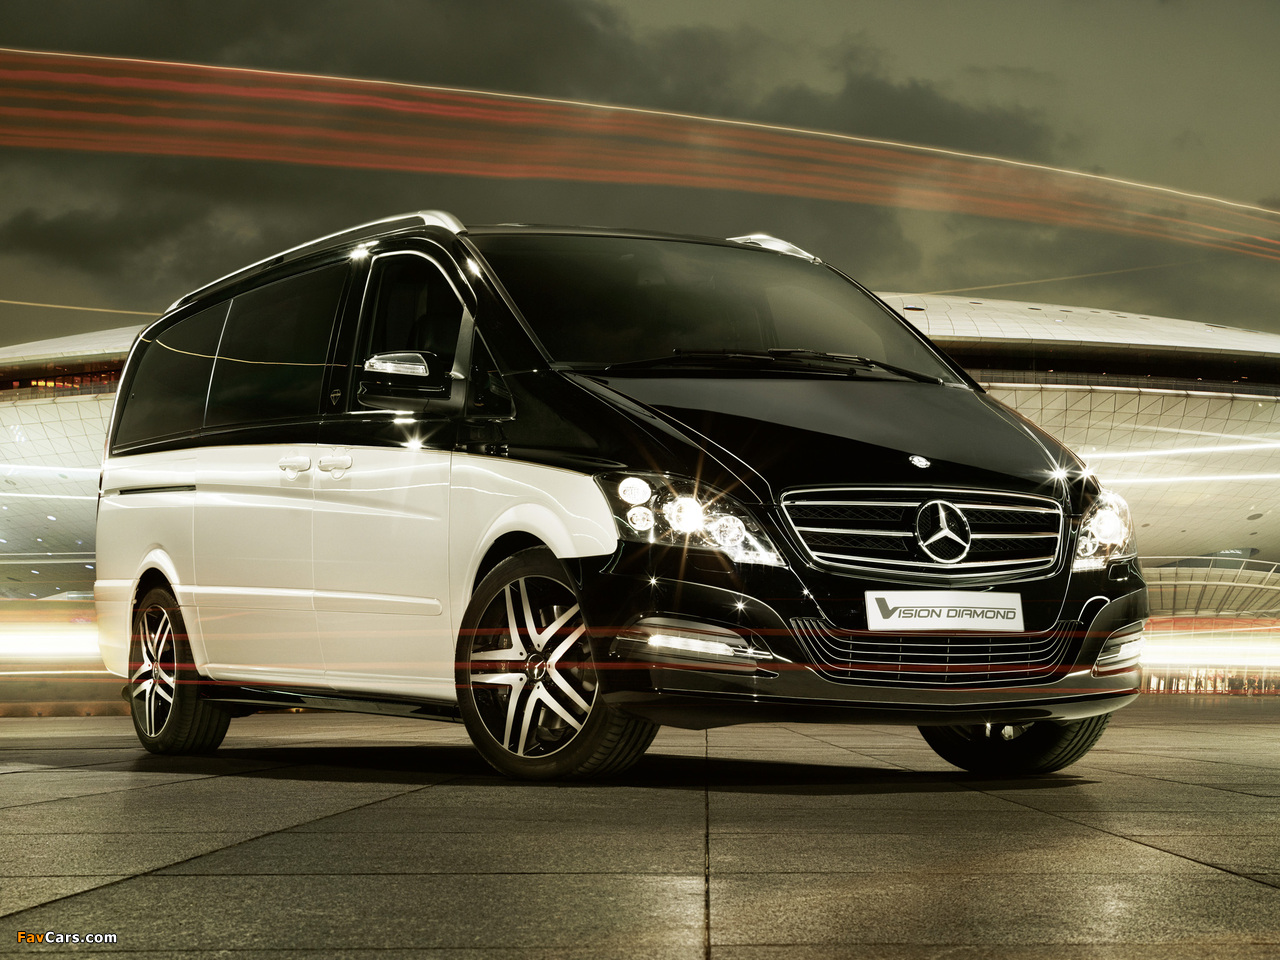 Mercedes-Benz Viano Vision Diamond Concept (W639) 2012 pictures (1280 x 960)